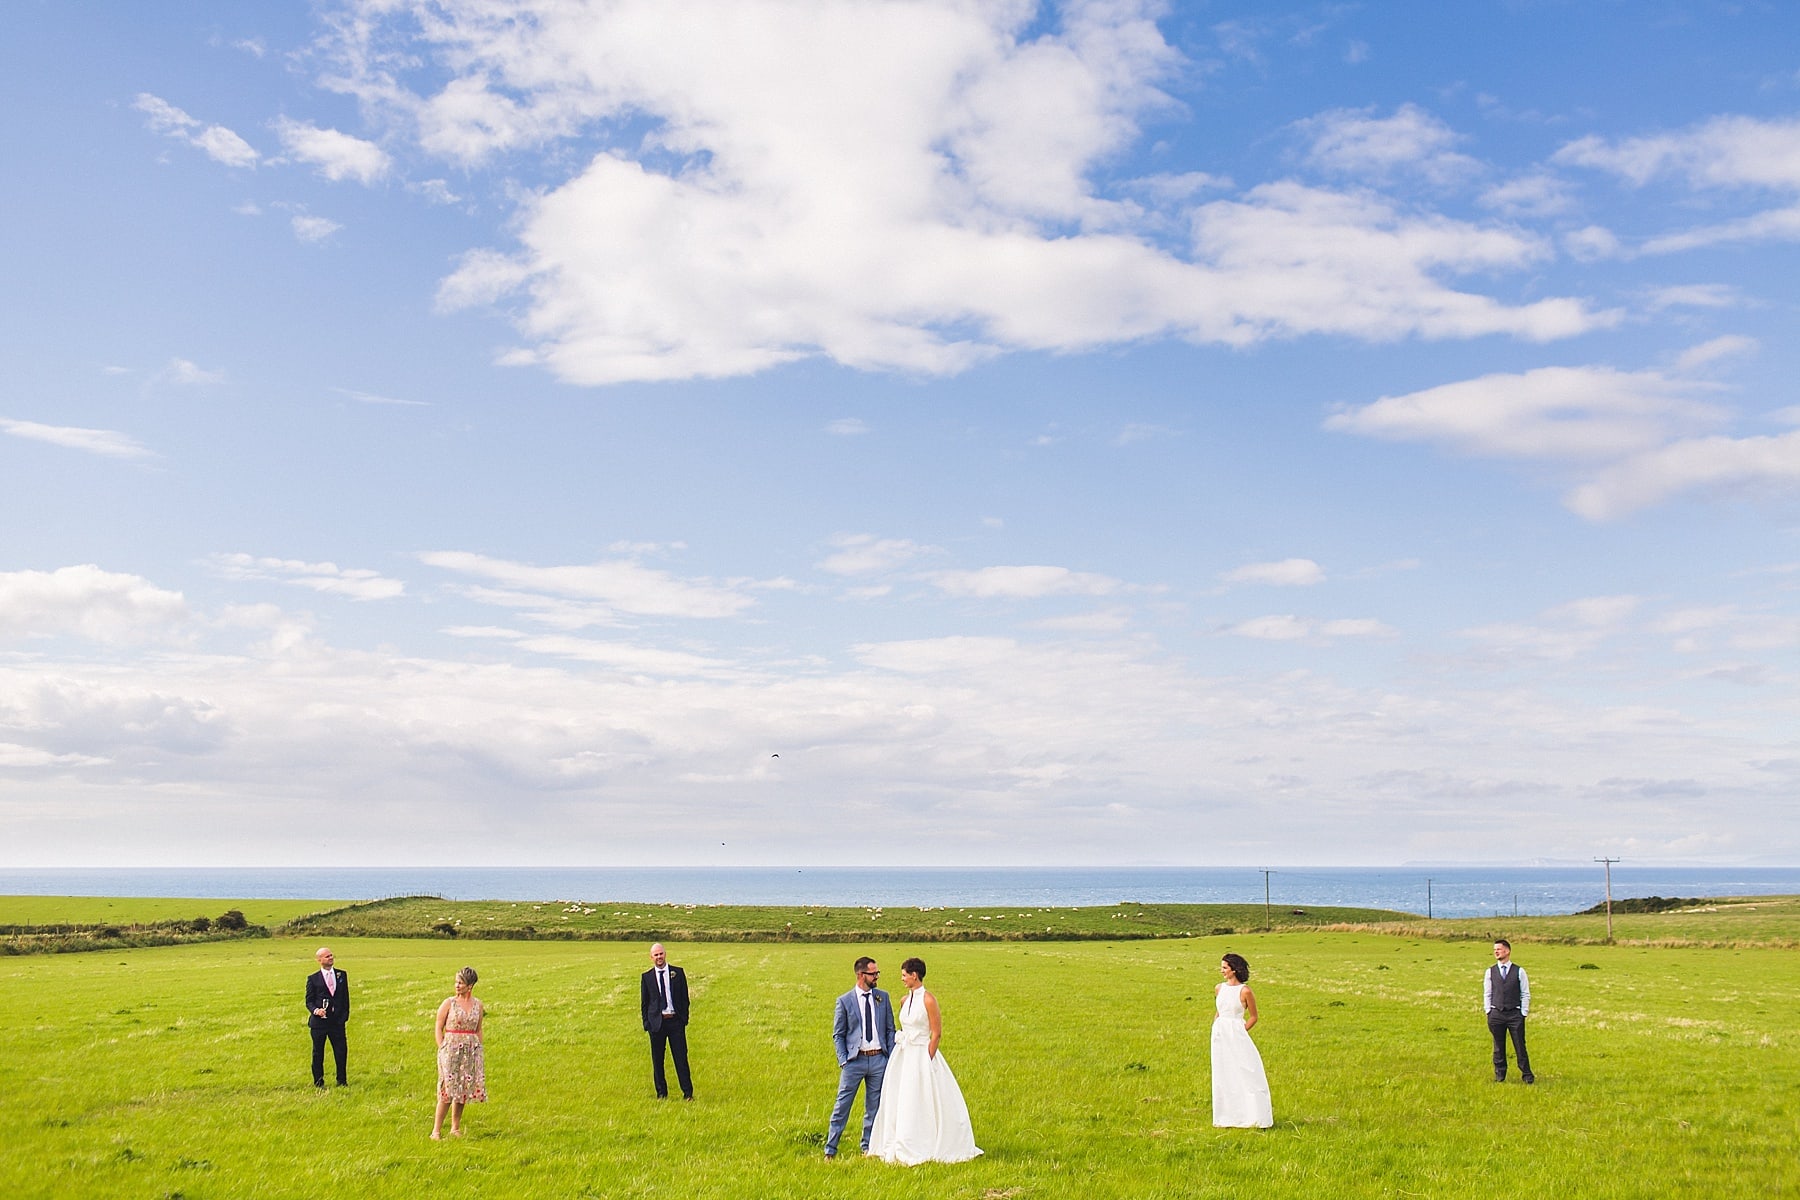 McShane Glen Cottages Wedding,Northern Ireland wedding photographer,north coast wedding venue,bride wedding dress pockets,joyful,fun,